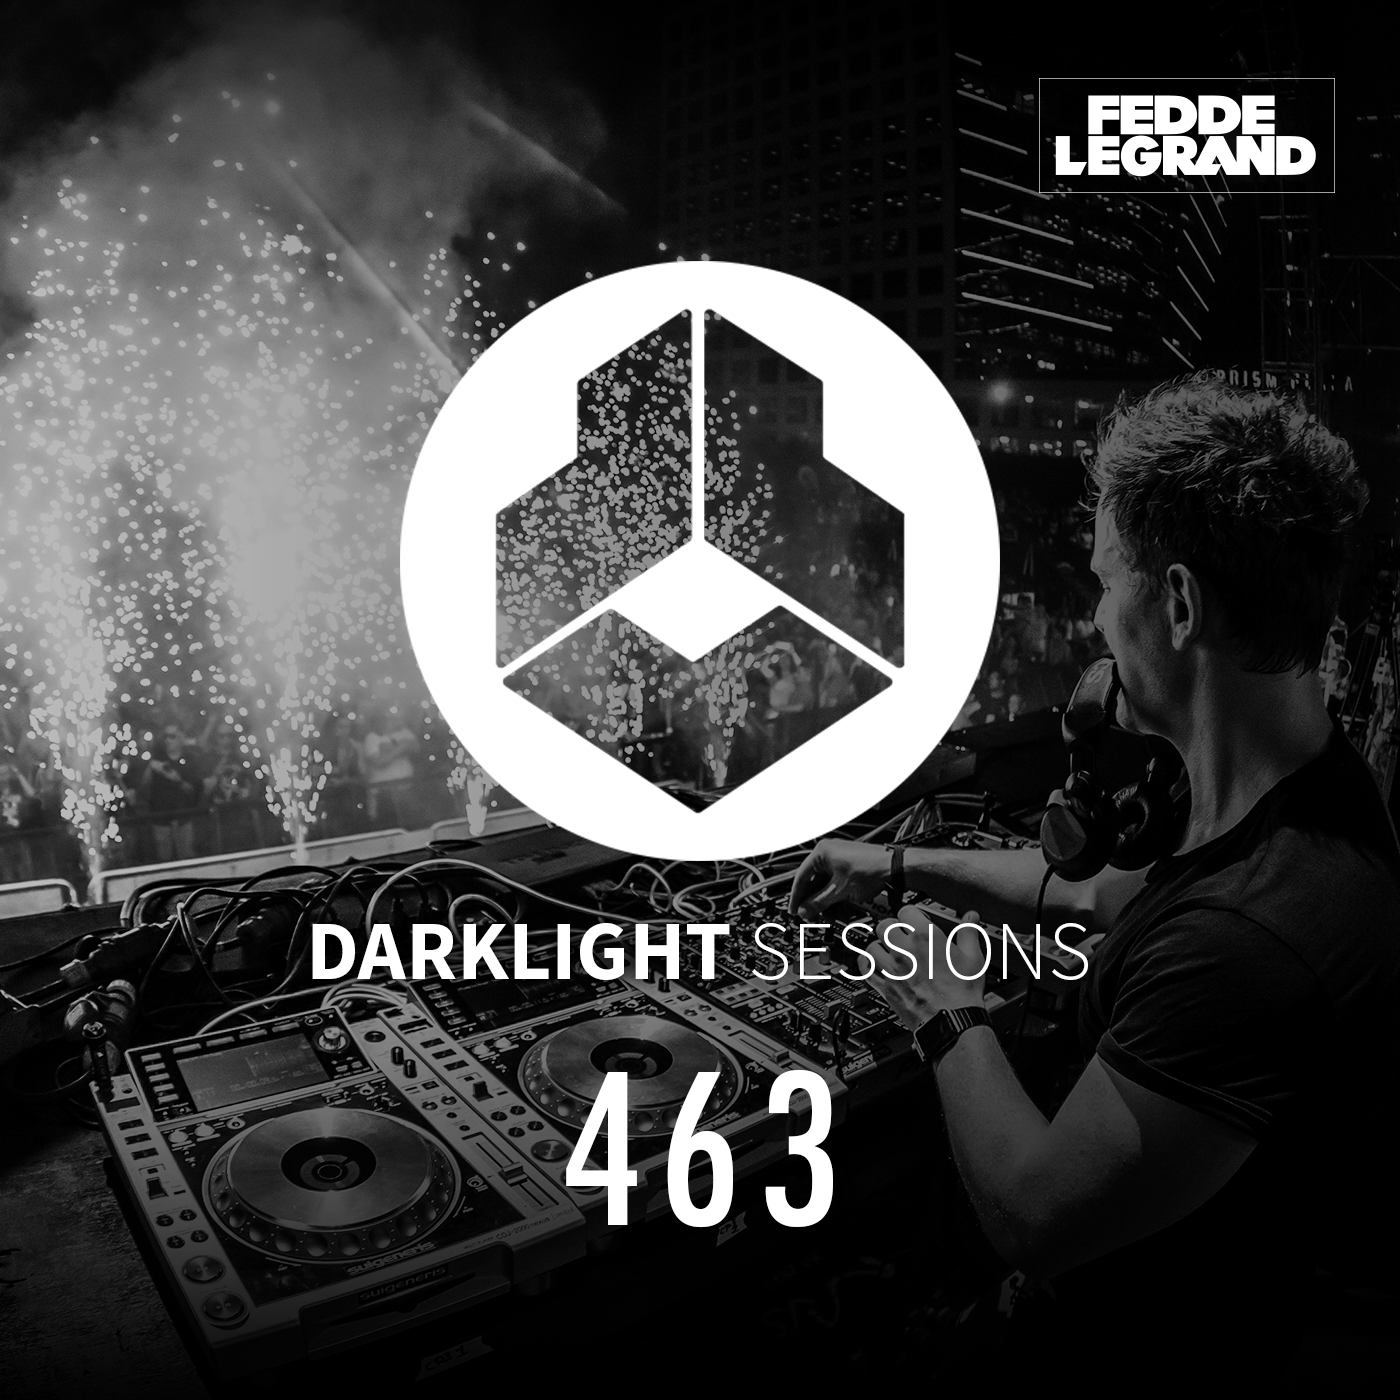 Darklight Sessions 463